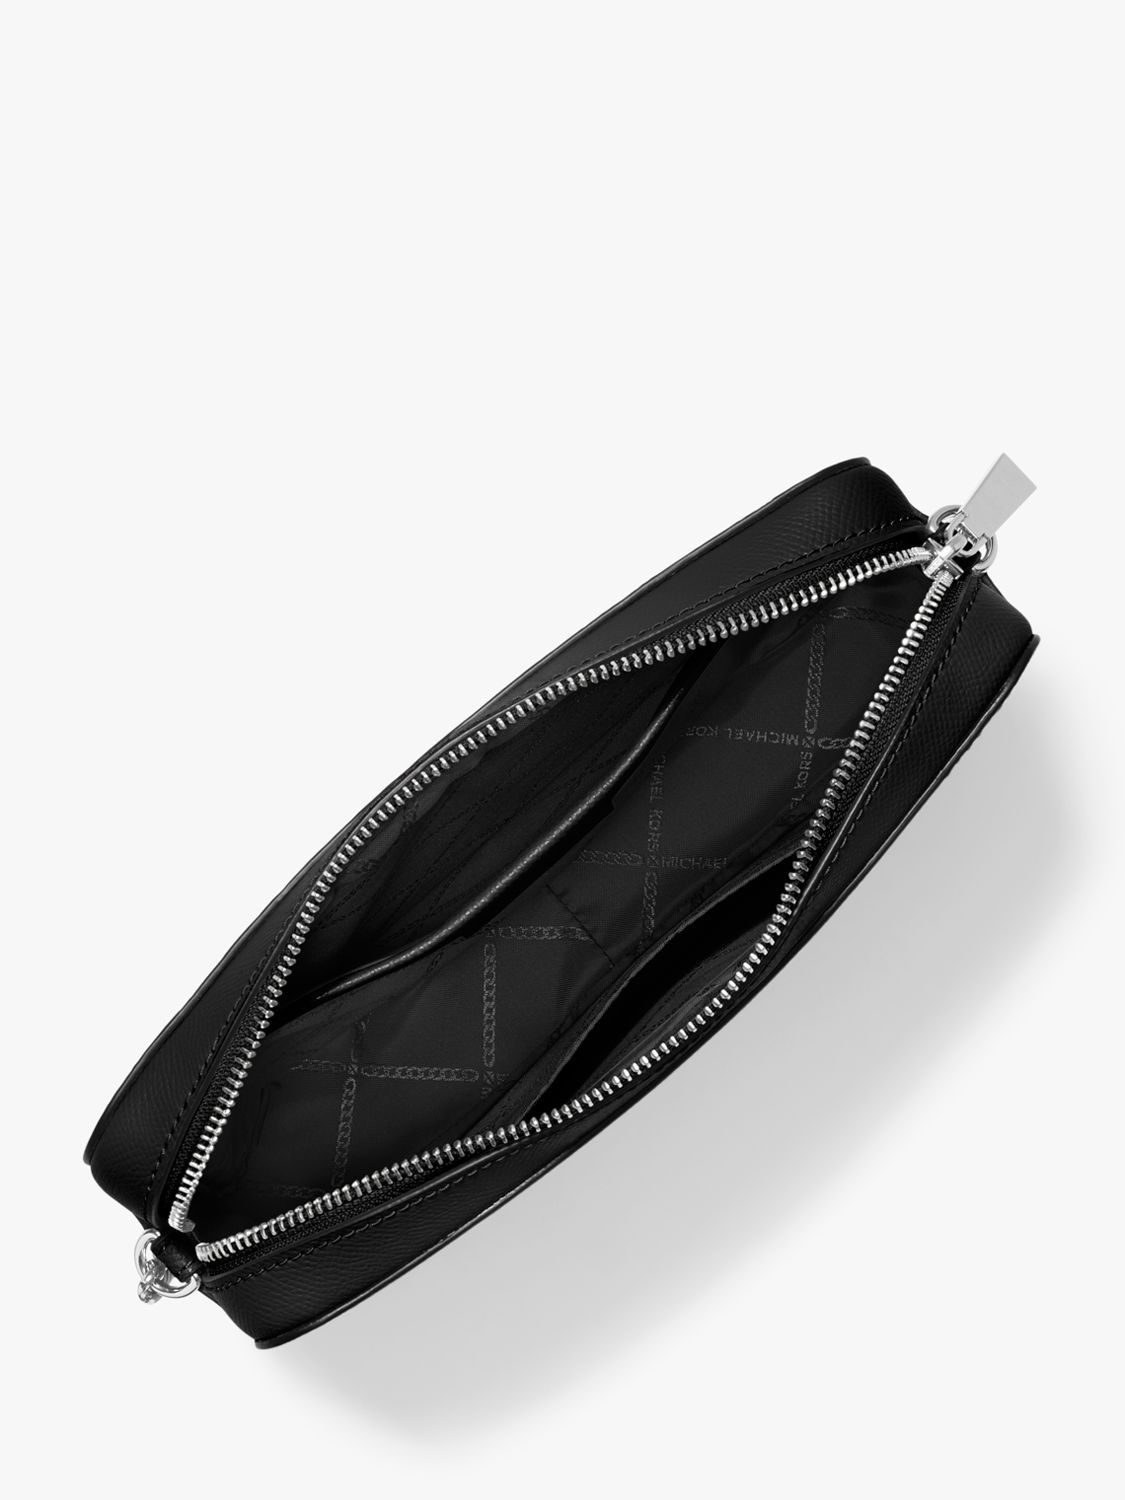 MICHAEL Michael Kors Jet Set Travel Leather East / West Cross Body Bag,  Black/Silver at John Lewis & Partners